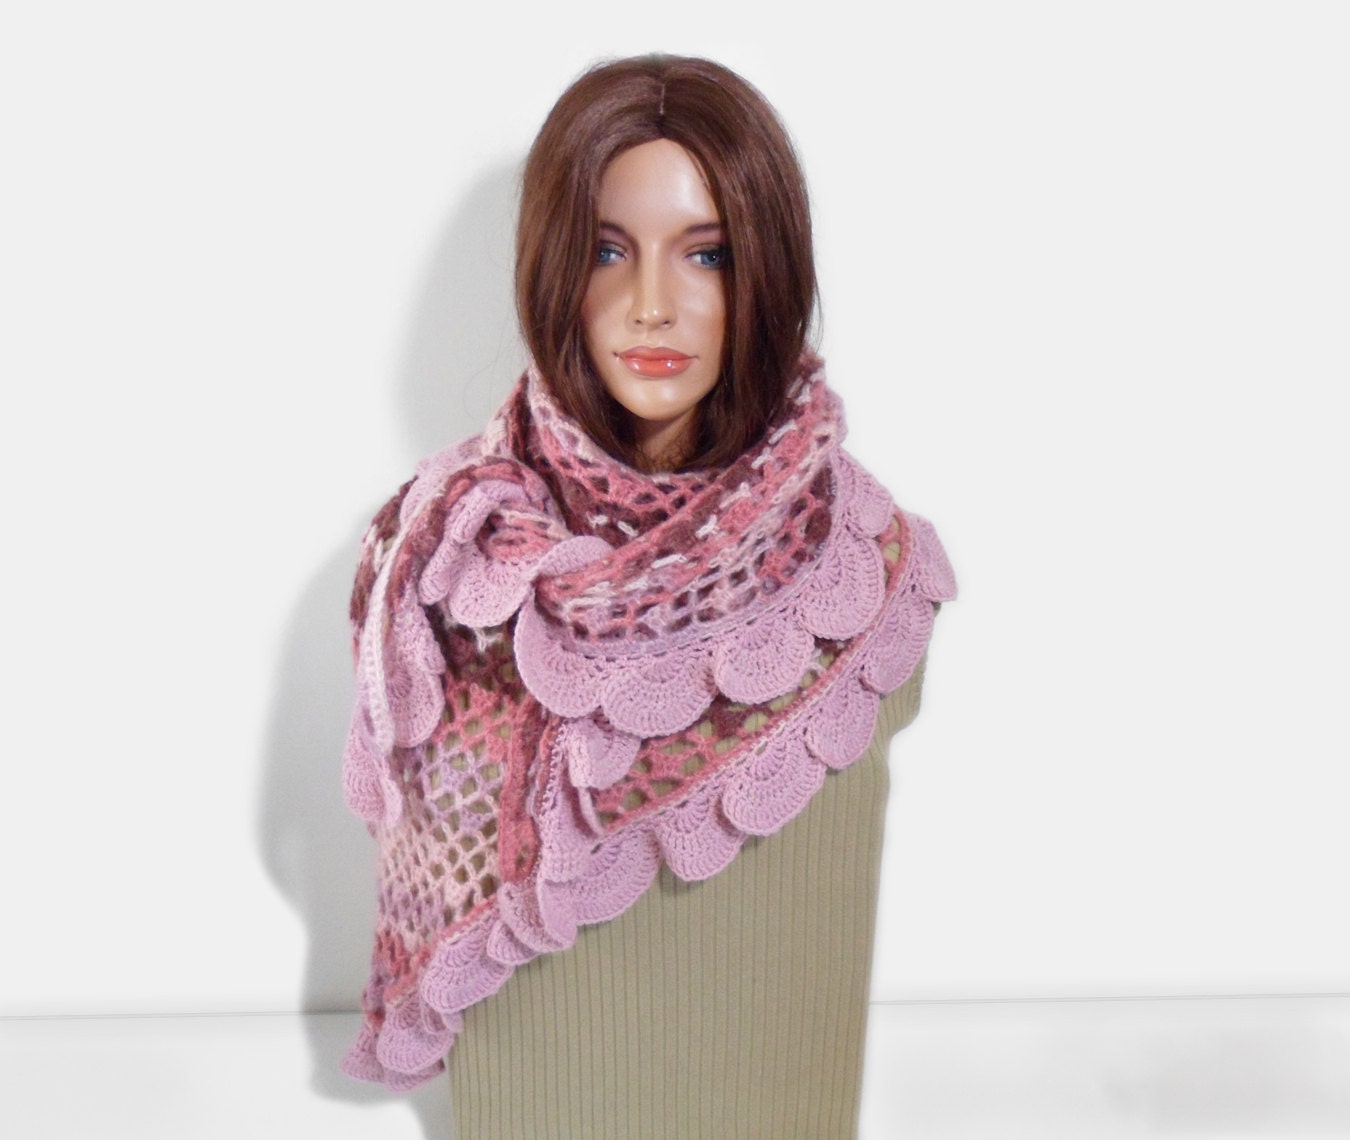 Crochet Shawl, Handmade Triangle Shawl, Winter Accessory in Pink - UnlimitedCraftworks